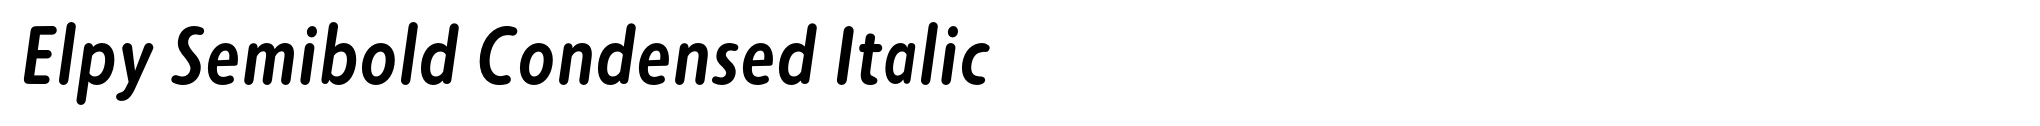 Elpy Semibold Condensed Italic image